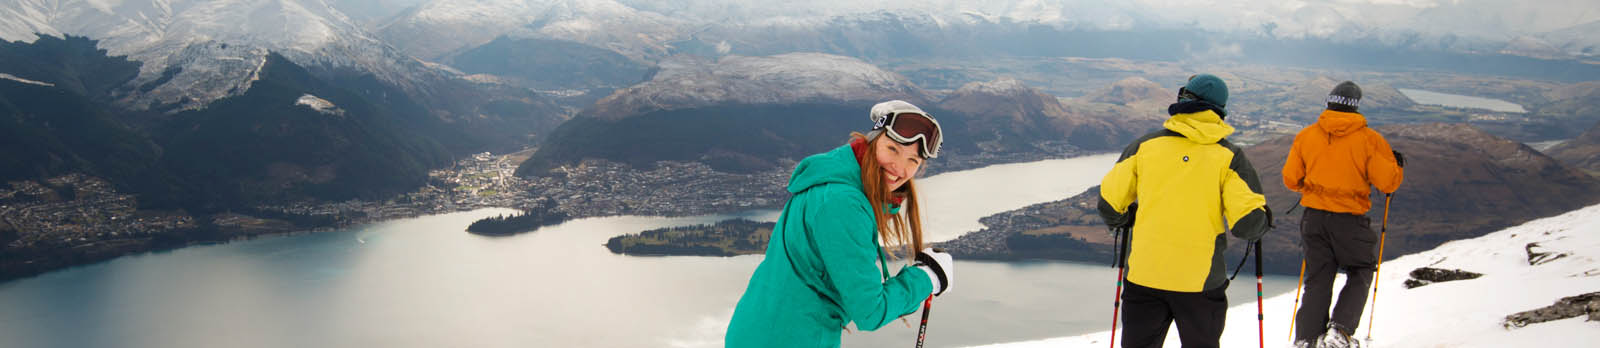 Ski tour in New Zealand